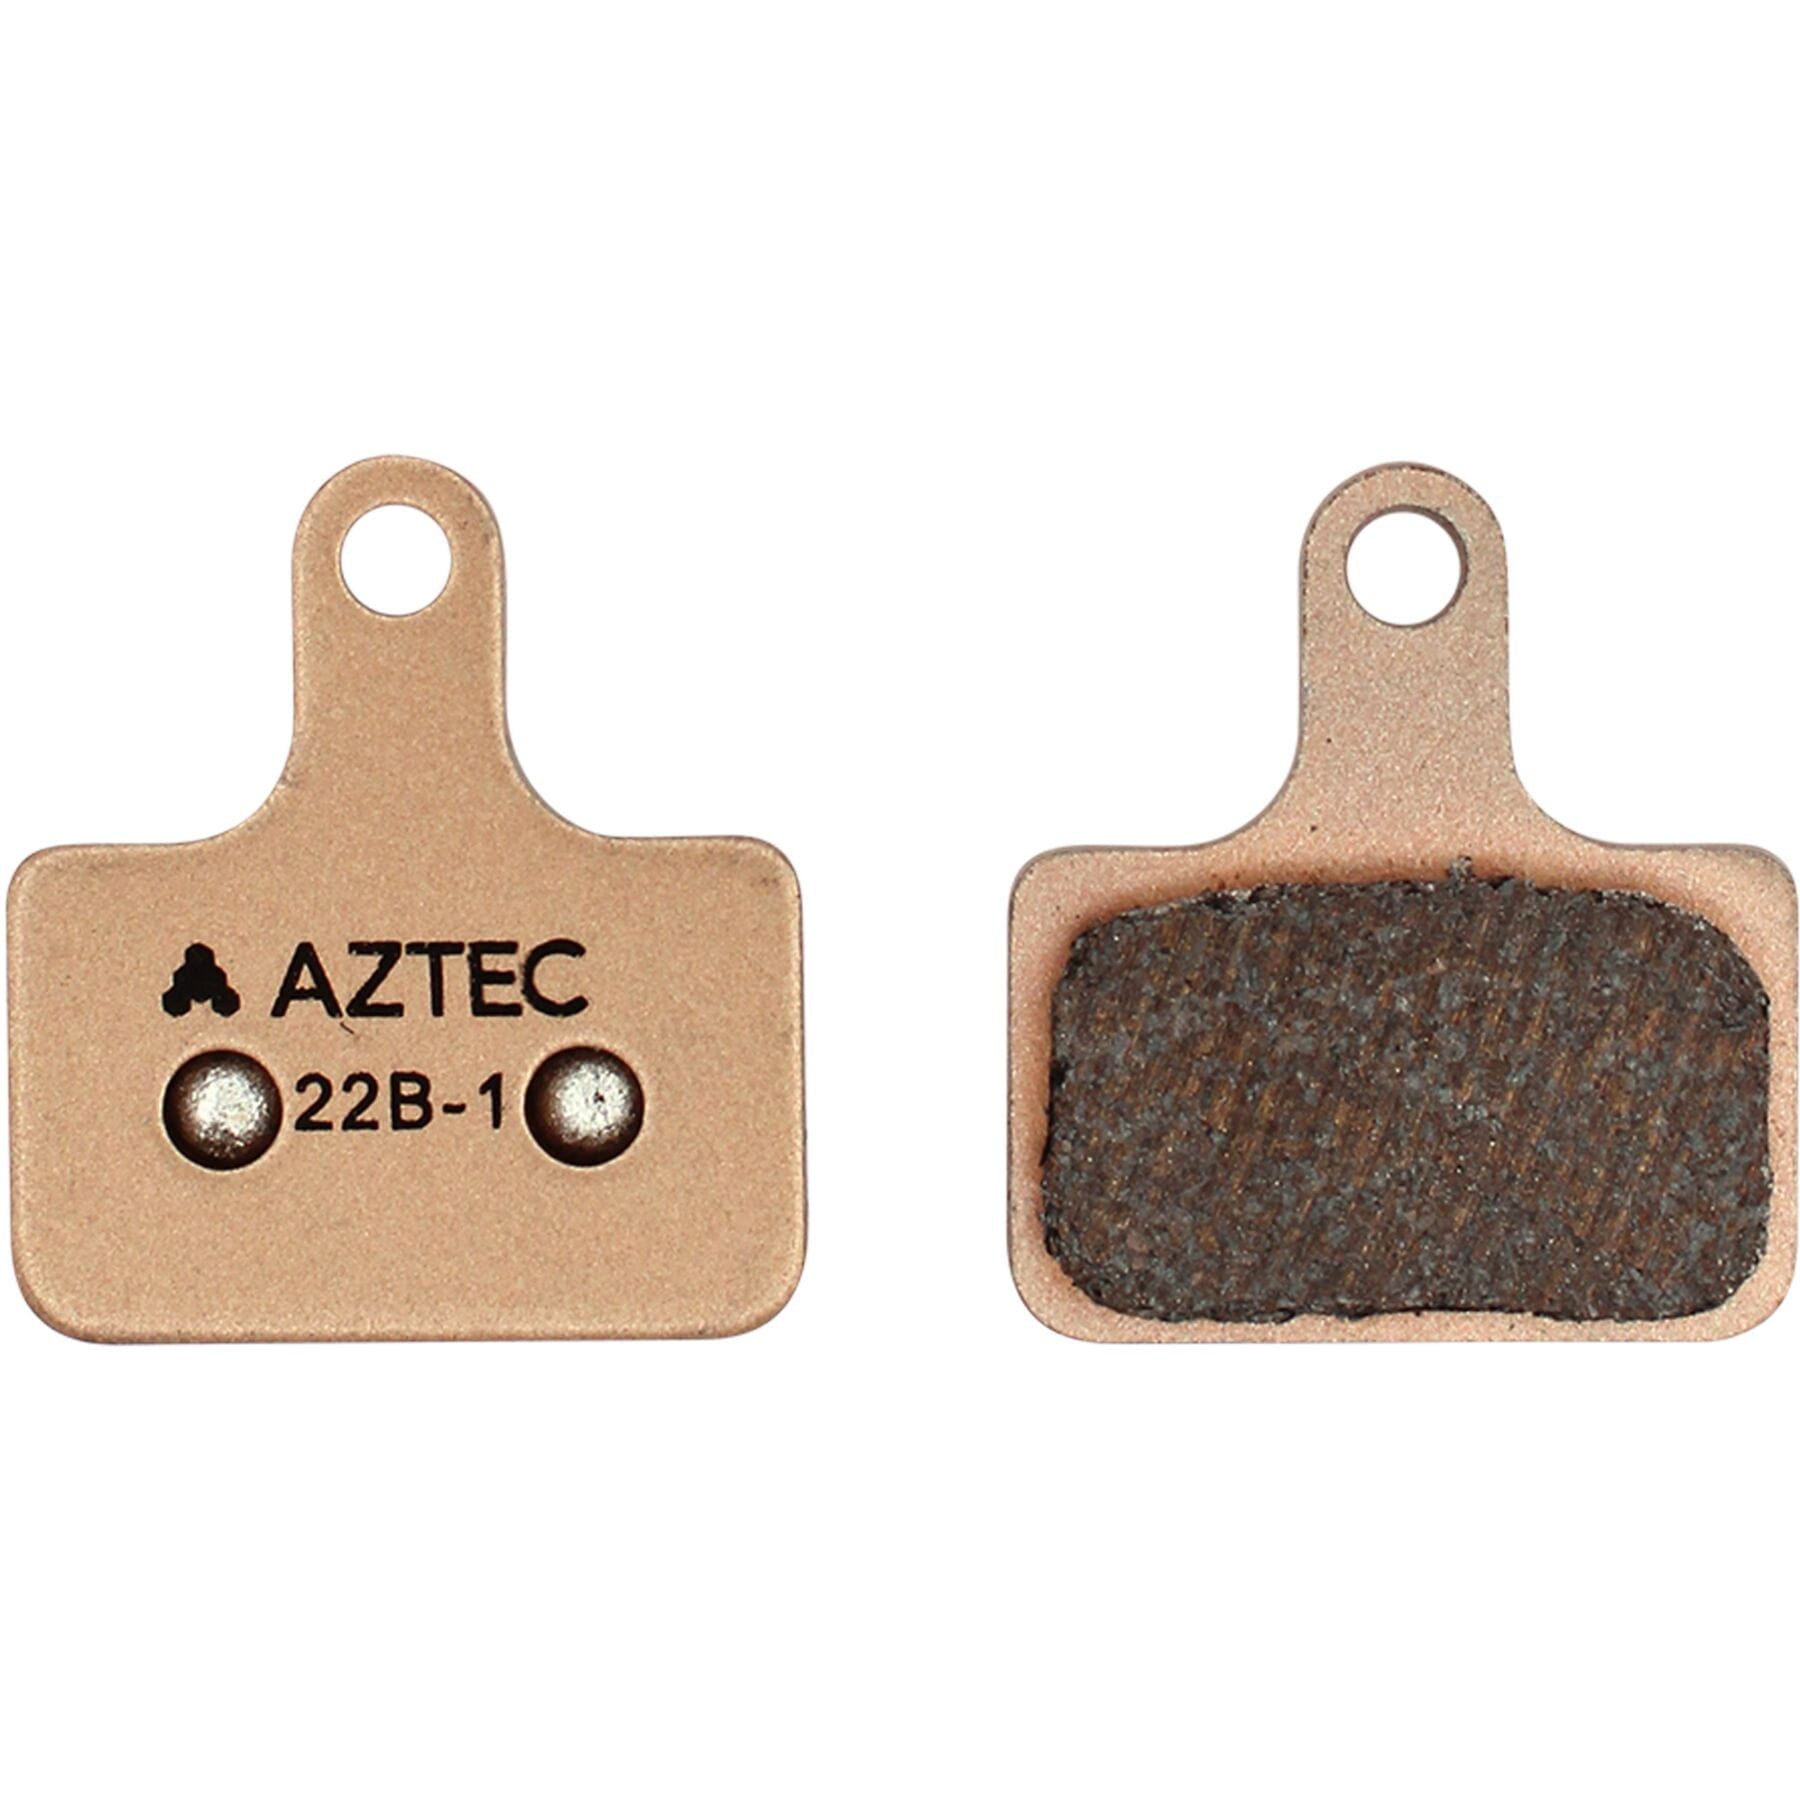 Aztec Shimano GRX/Ultegra/Dura-Ace Brake Pads